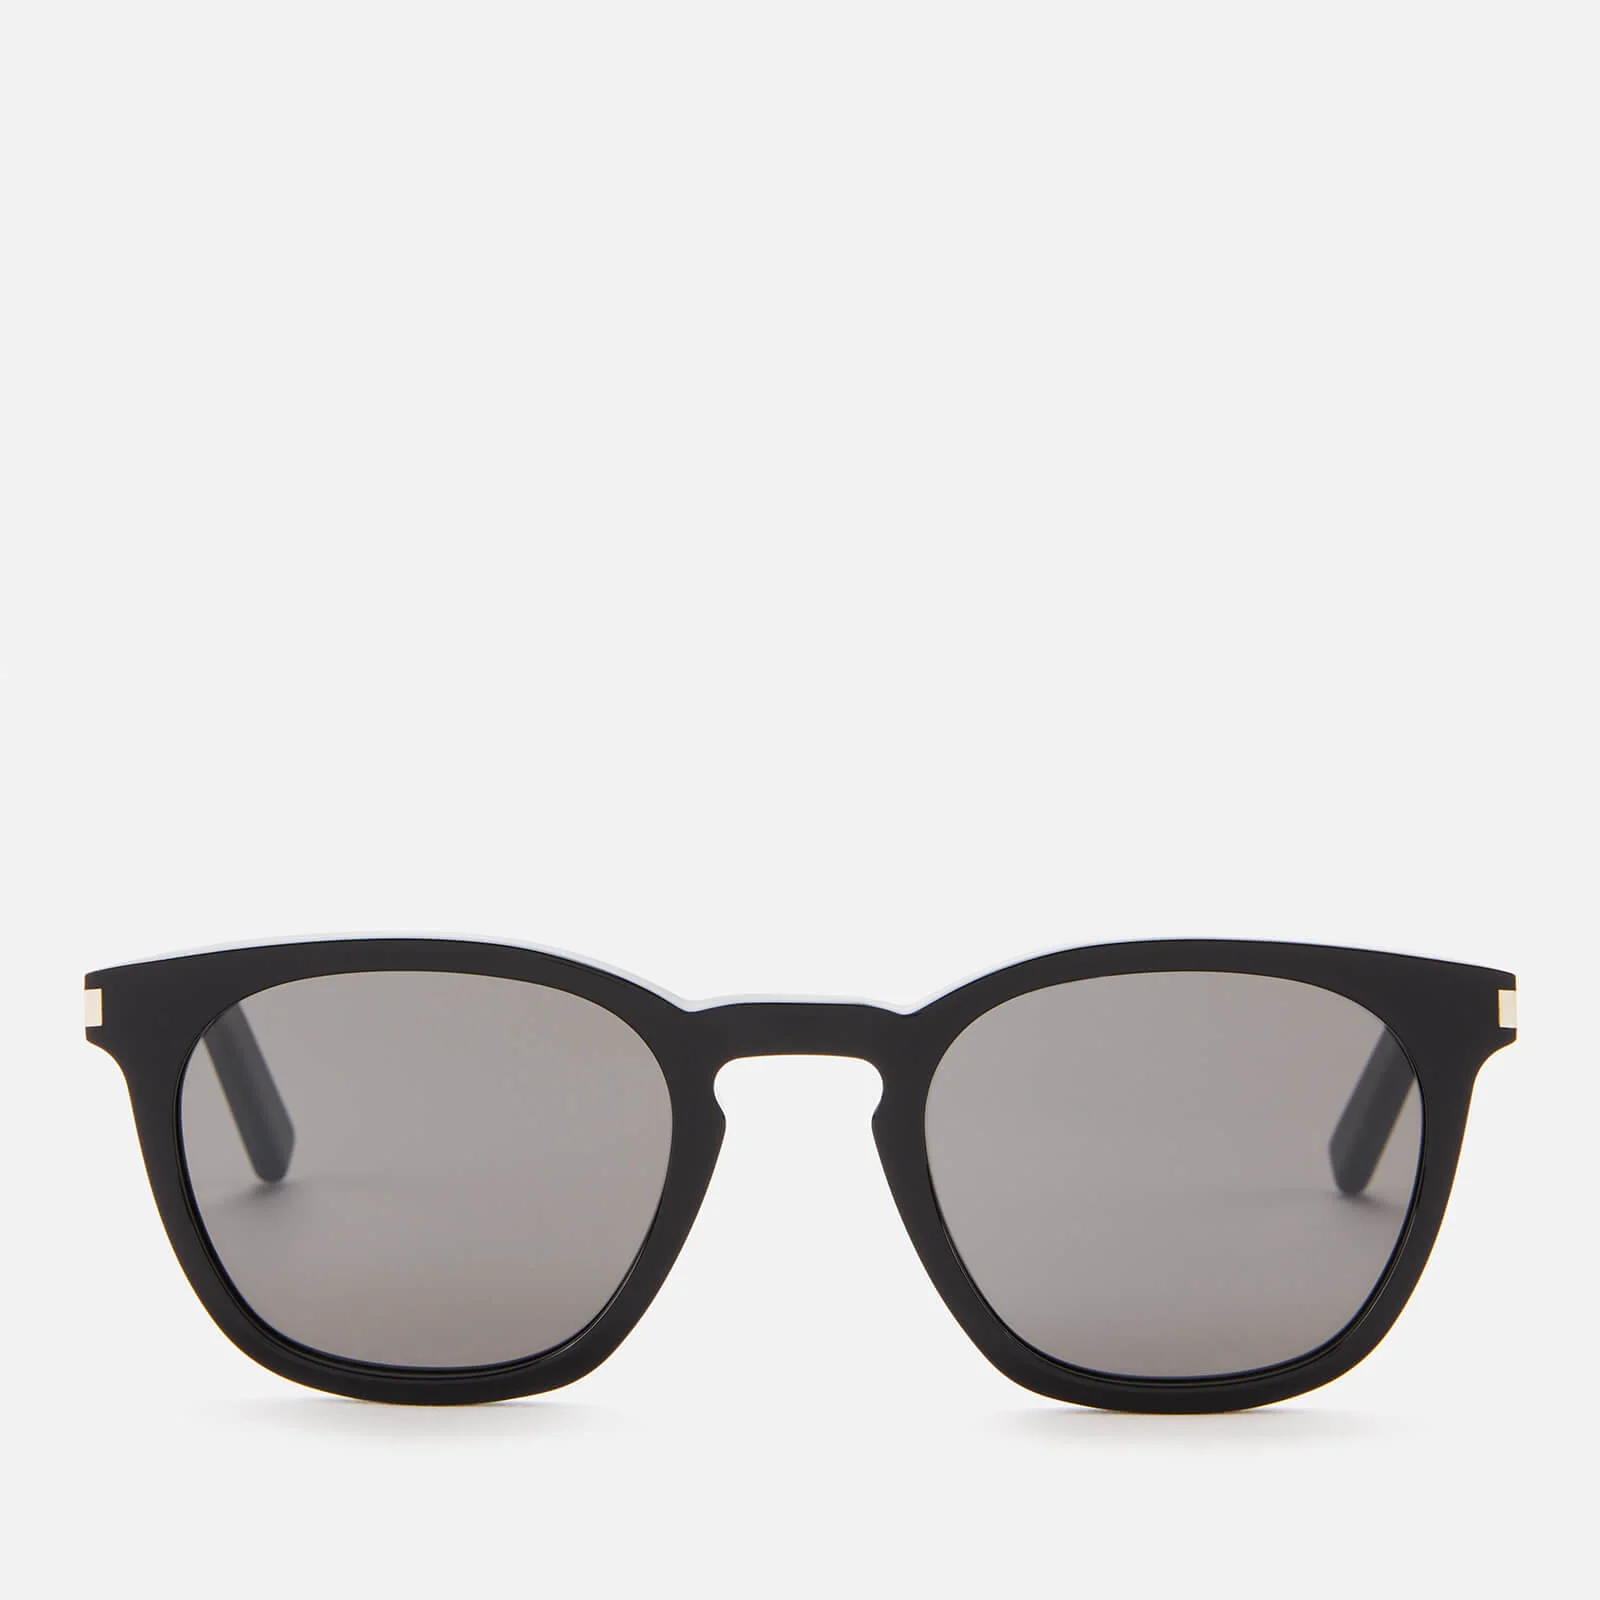 Saint Laurent Men's D-Frame Acetate Sunglasses - Black/Smoke Image 1